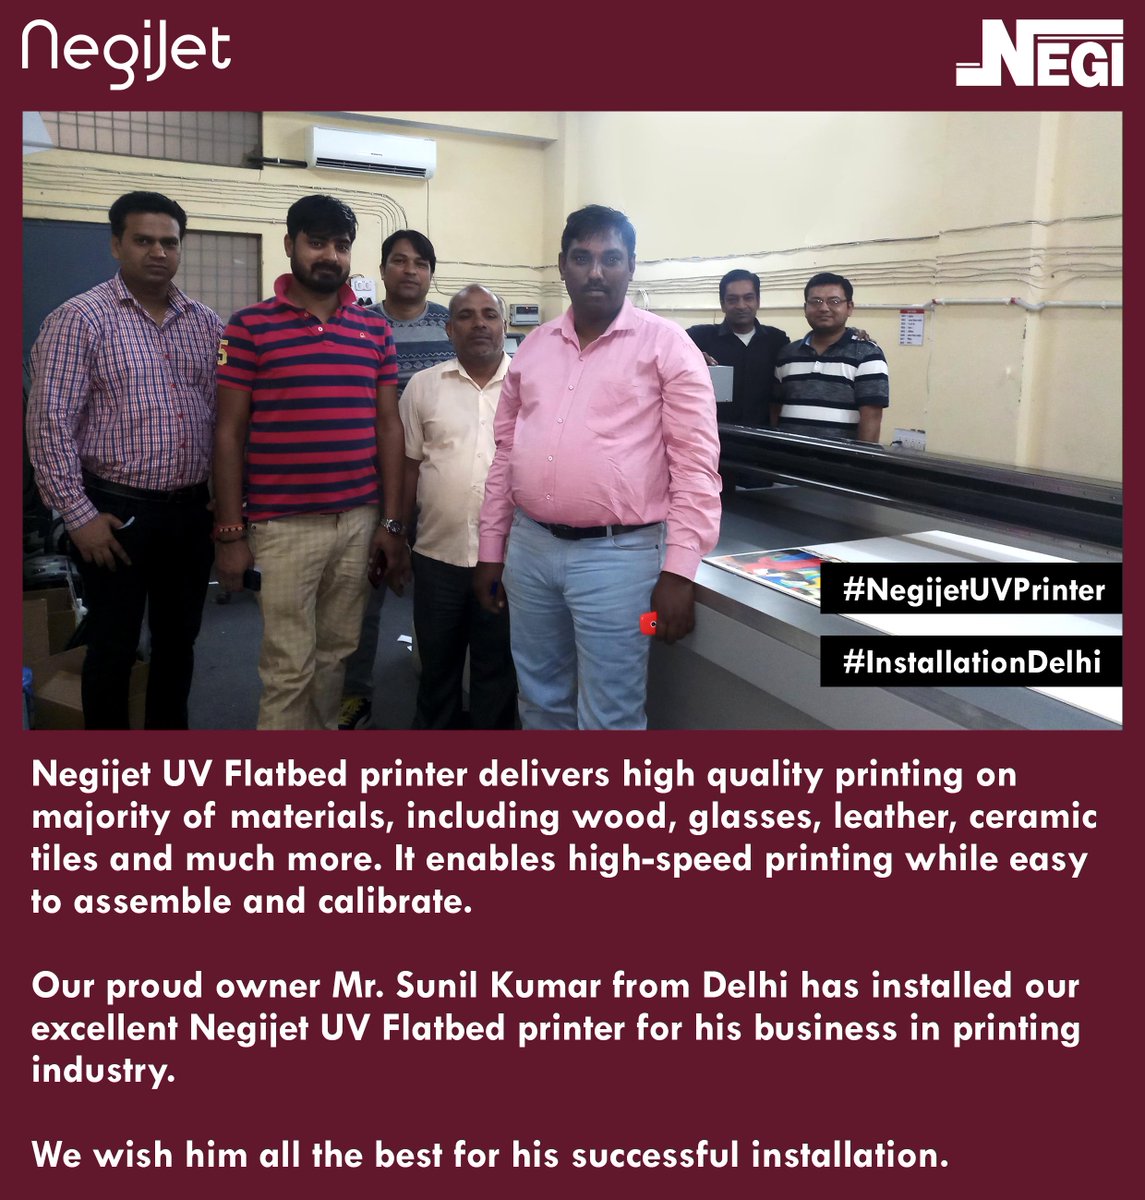 #Negi #Negijet #UV #Flatbed #Printer #Proudowner #Successful #Installation #Delhi #Highspeed #HighQualityPrinting

For more details 
Contact us on : +91 22 61566000
Whatsapp : +918433908685
Email : sales@negisign.com
Visit Our Website
negisign.com